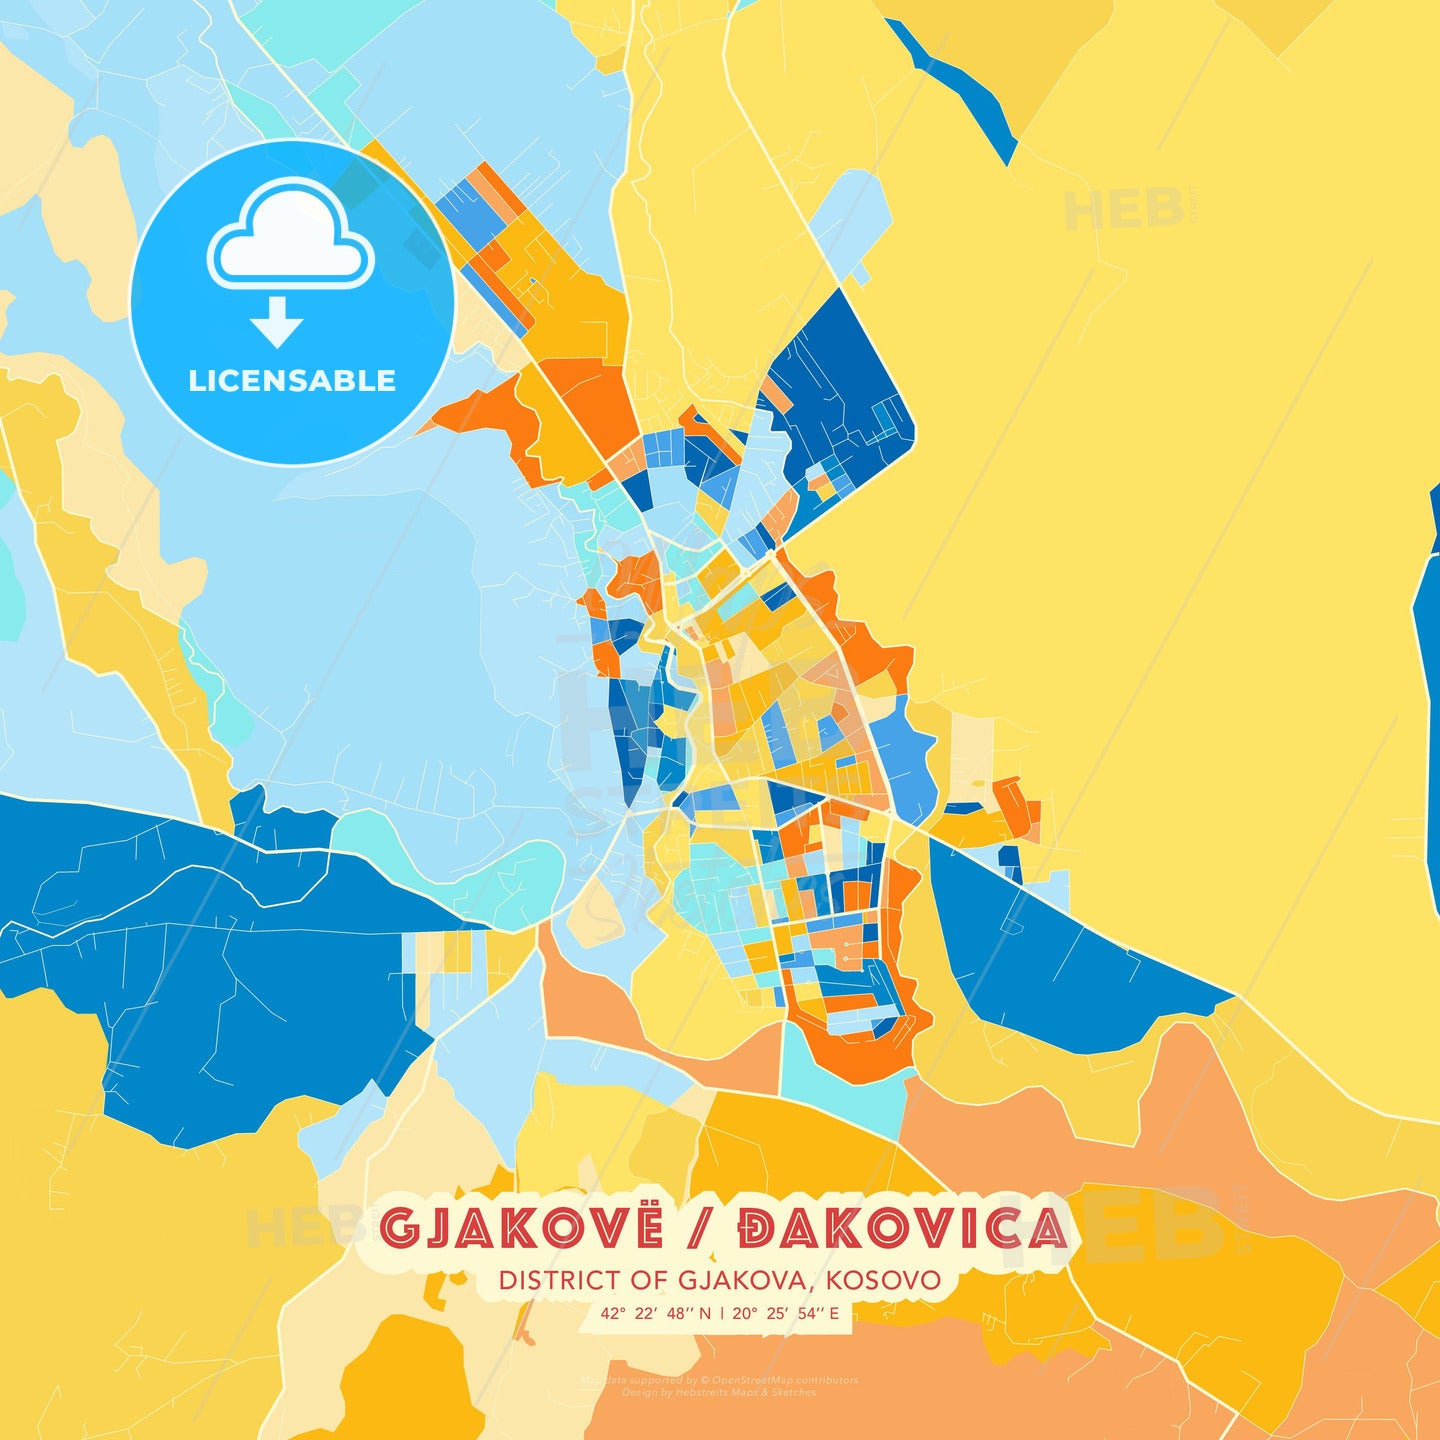 Gjakovë / Đakovica, District of Gjakova, Kosovo, map - HEBSTREITS Sketches